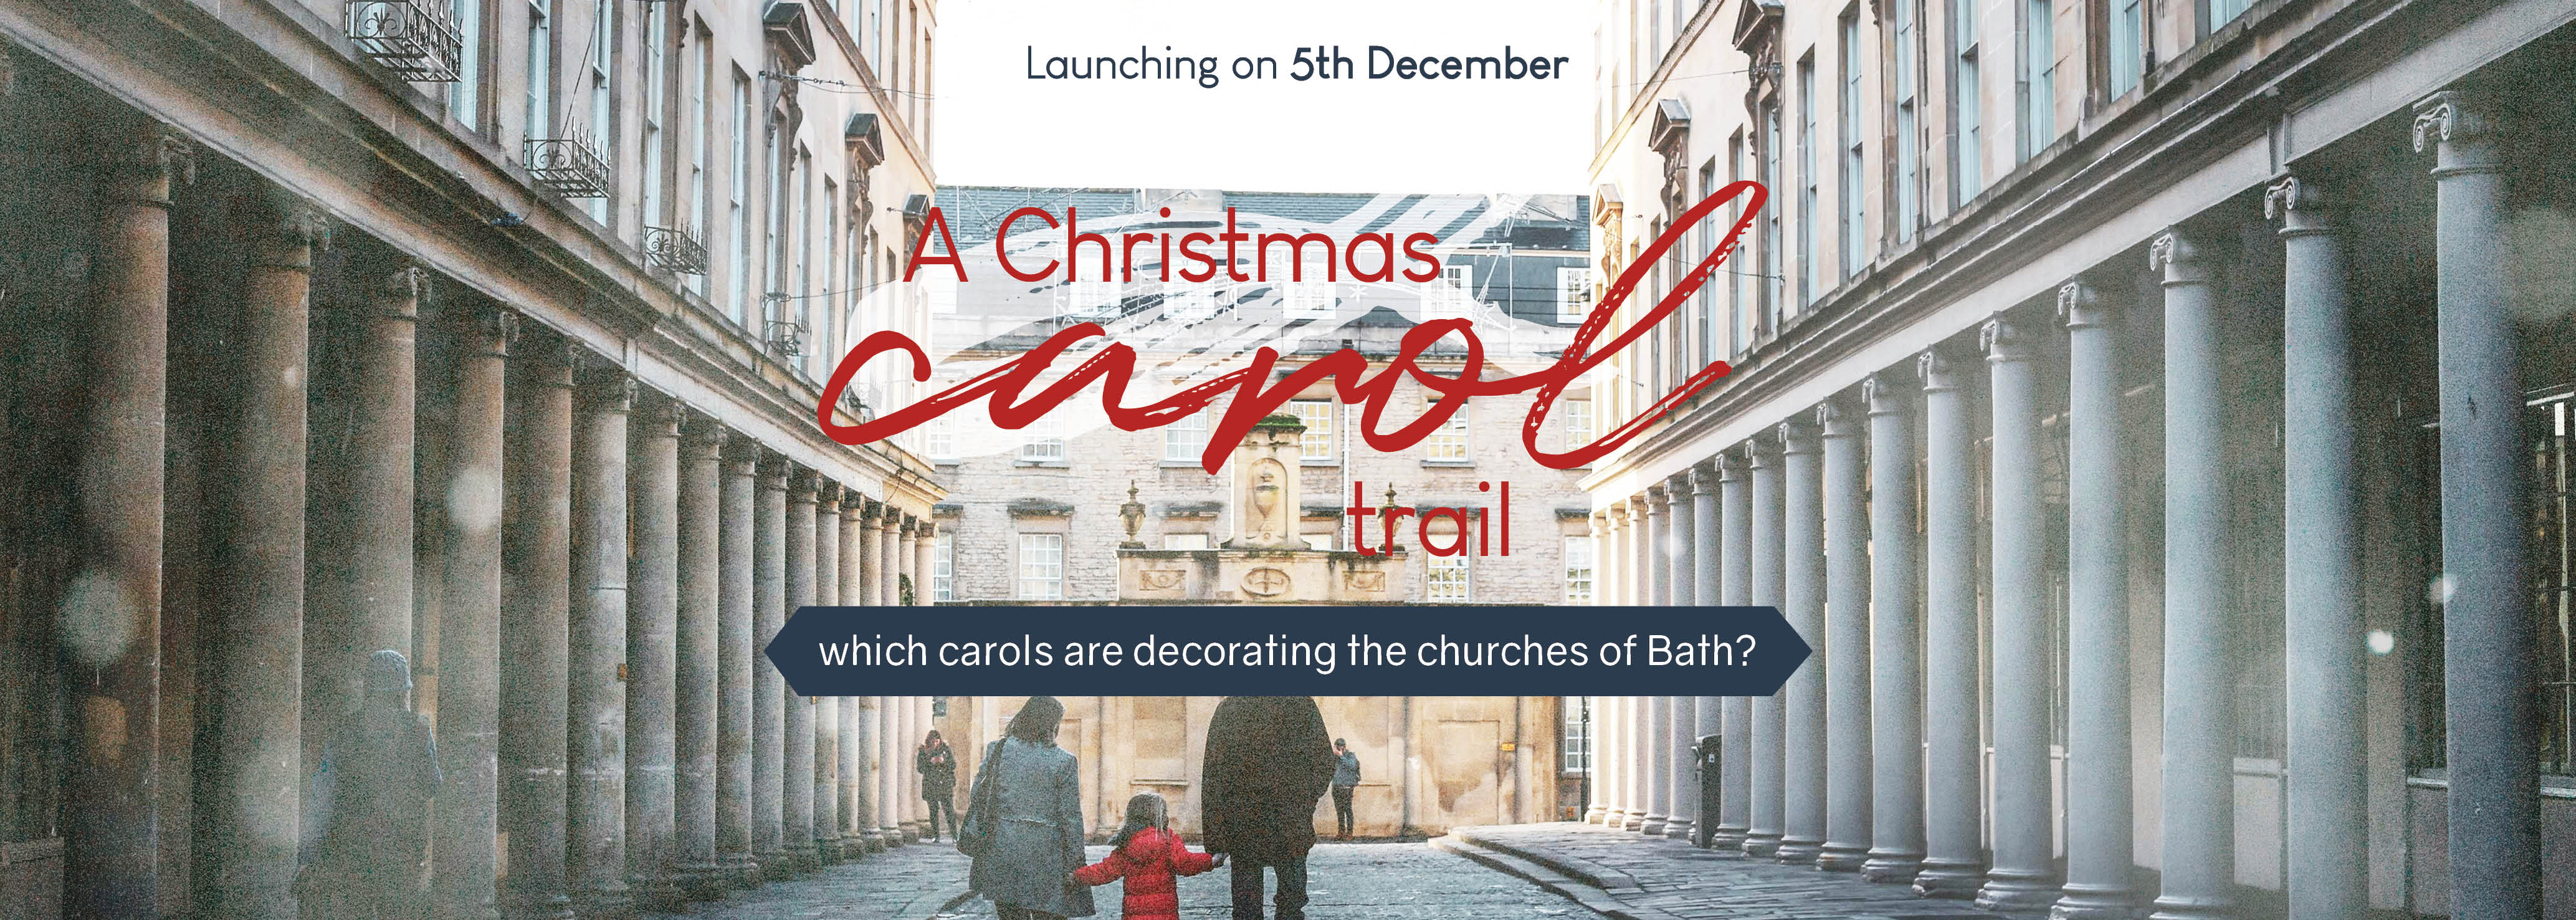 Christmas carol - website bann